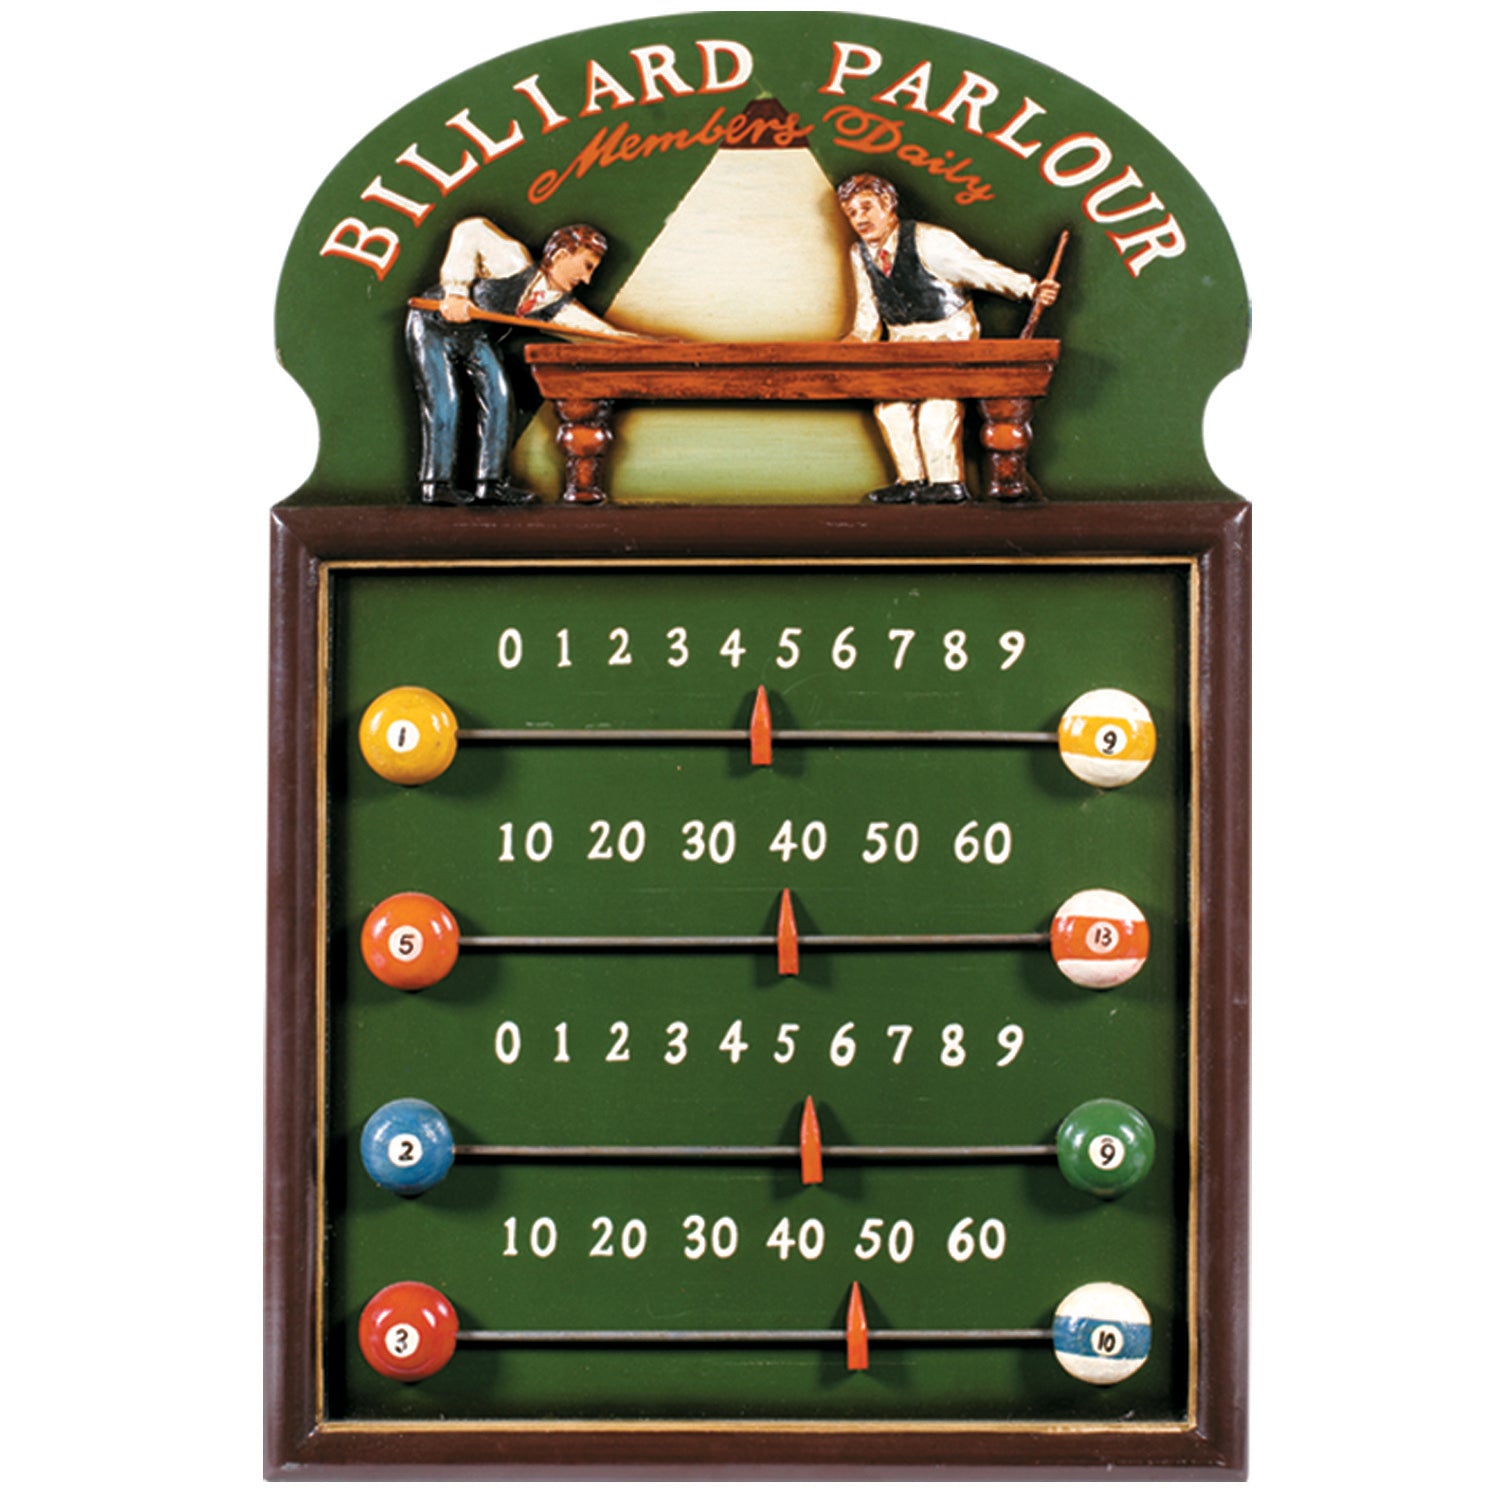 RAM Game Room “Billiard Parlour” Scoreboard